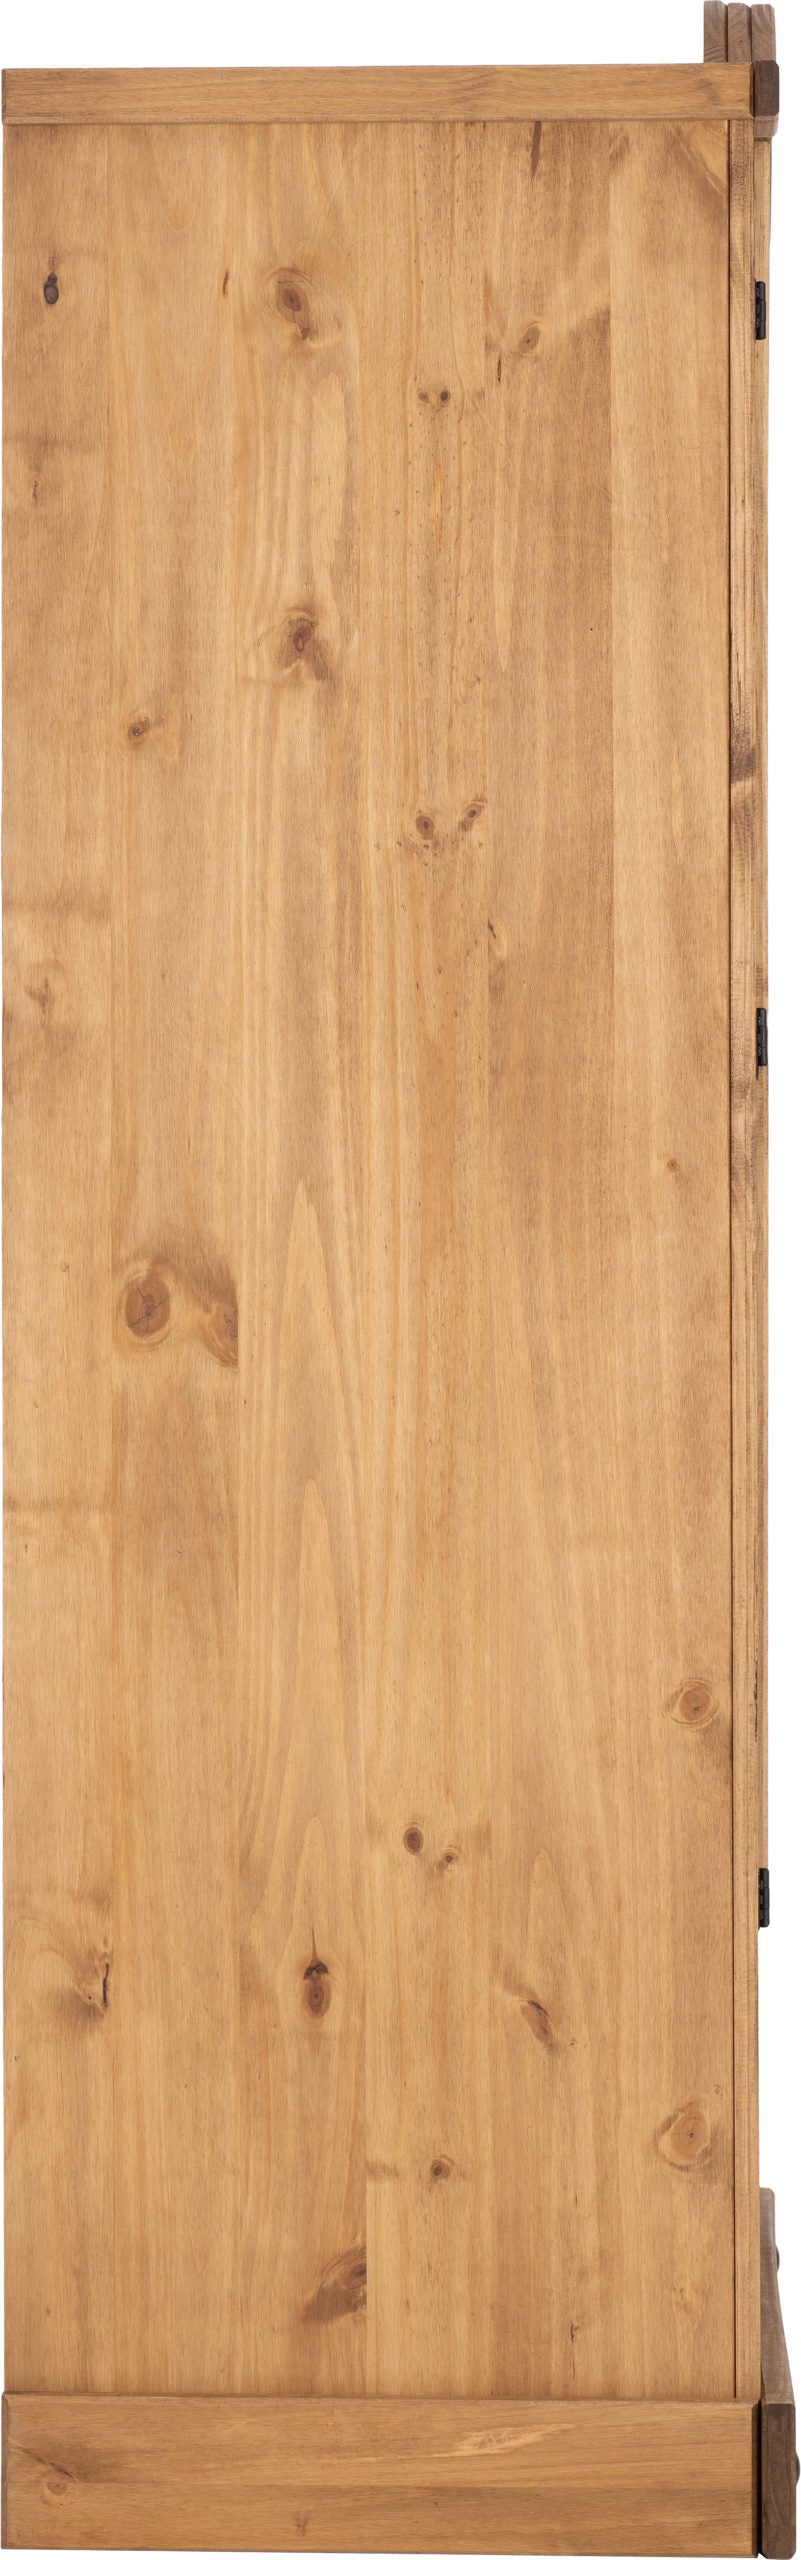 Corona 2 Door 1 Drawer Wardrobe in Distressed Waxed Pine